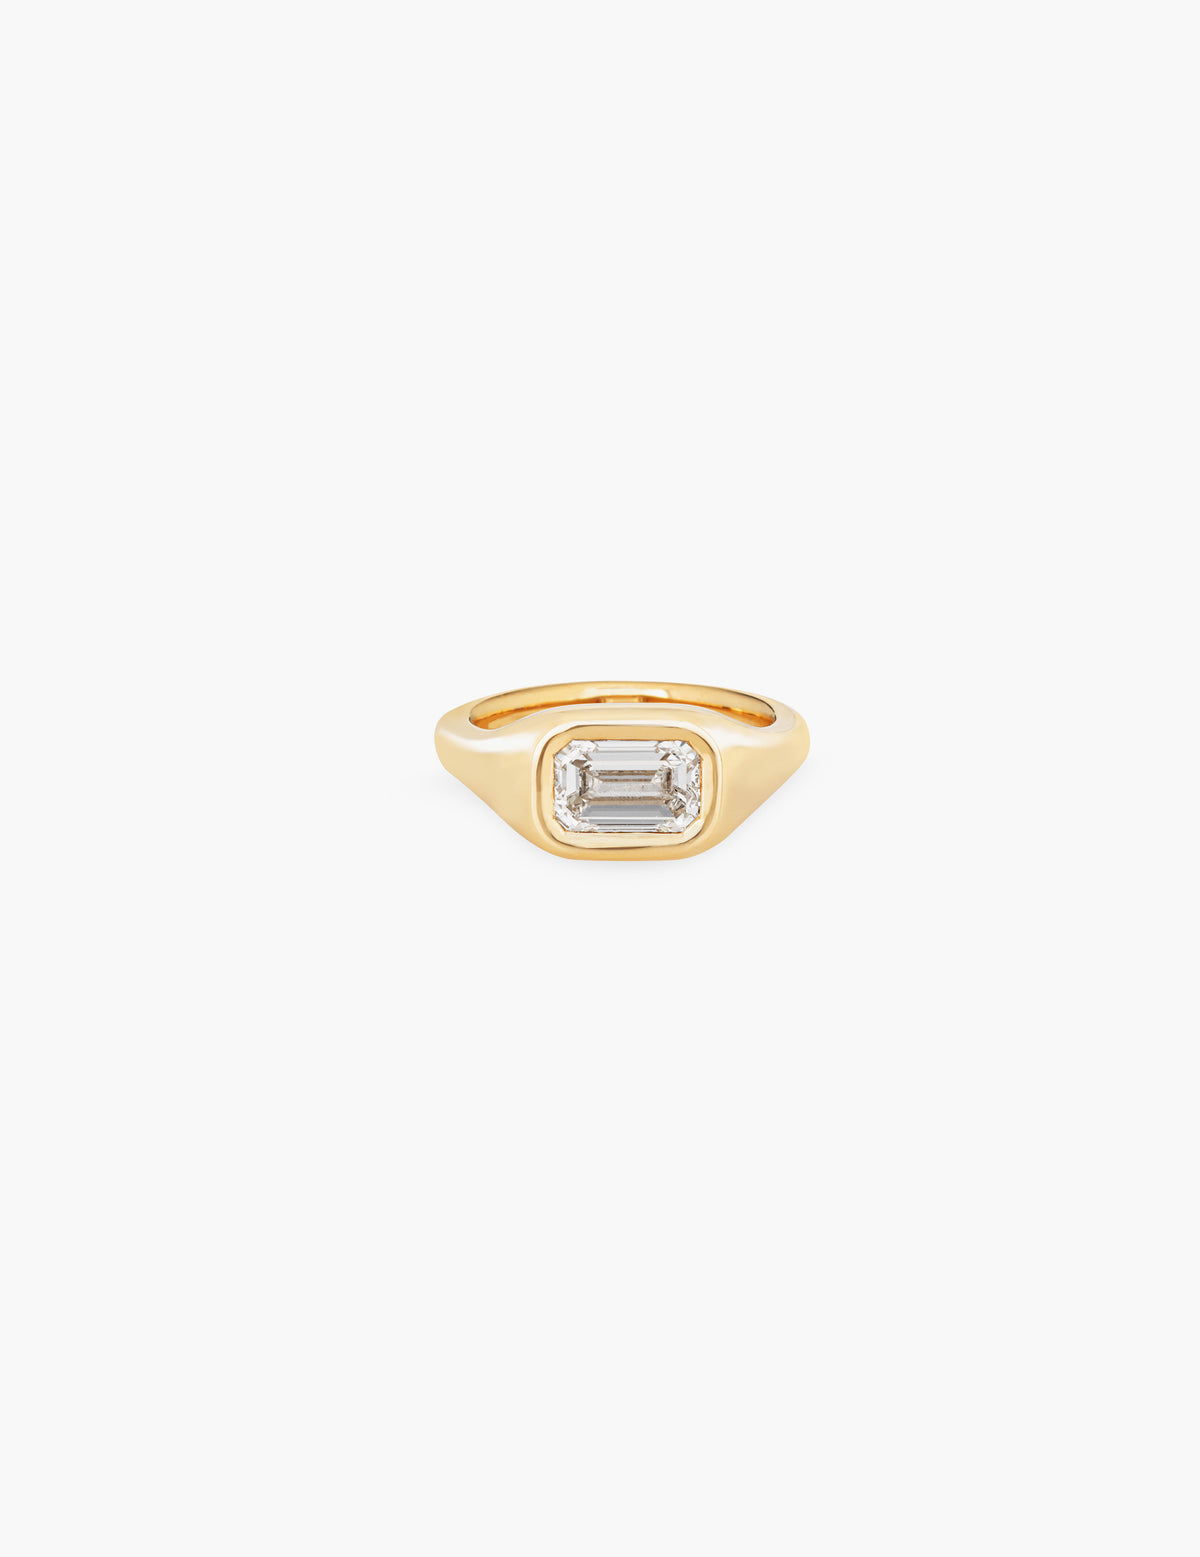 Golda Ring with 1.83ct Lab Grown Diamond